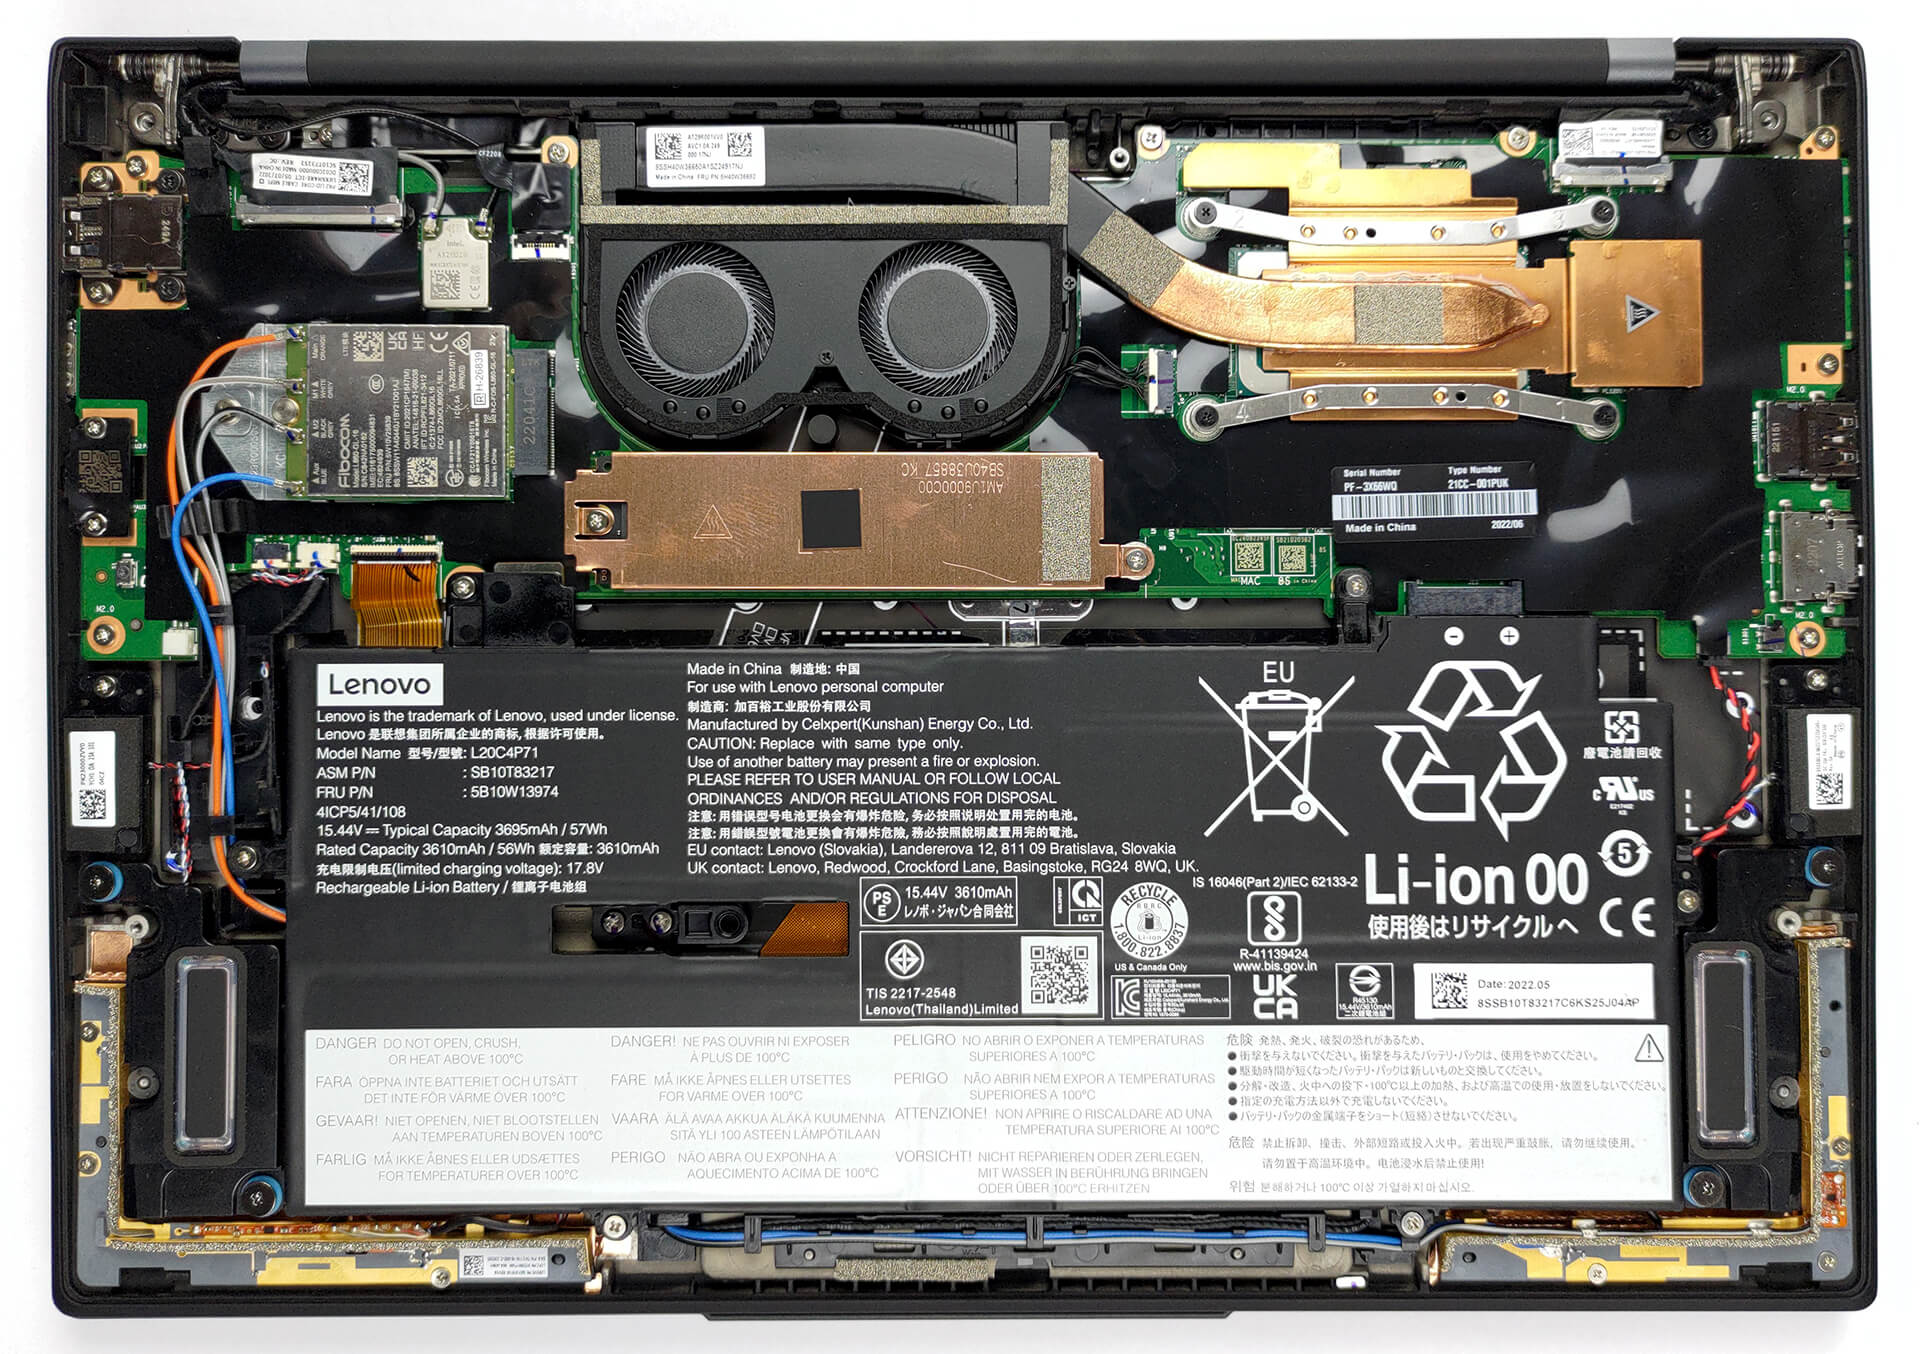 Lenovo ThinkPad X1 Carbon (10th Gen) review | LaptopMedia.com